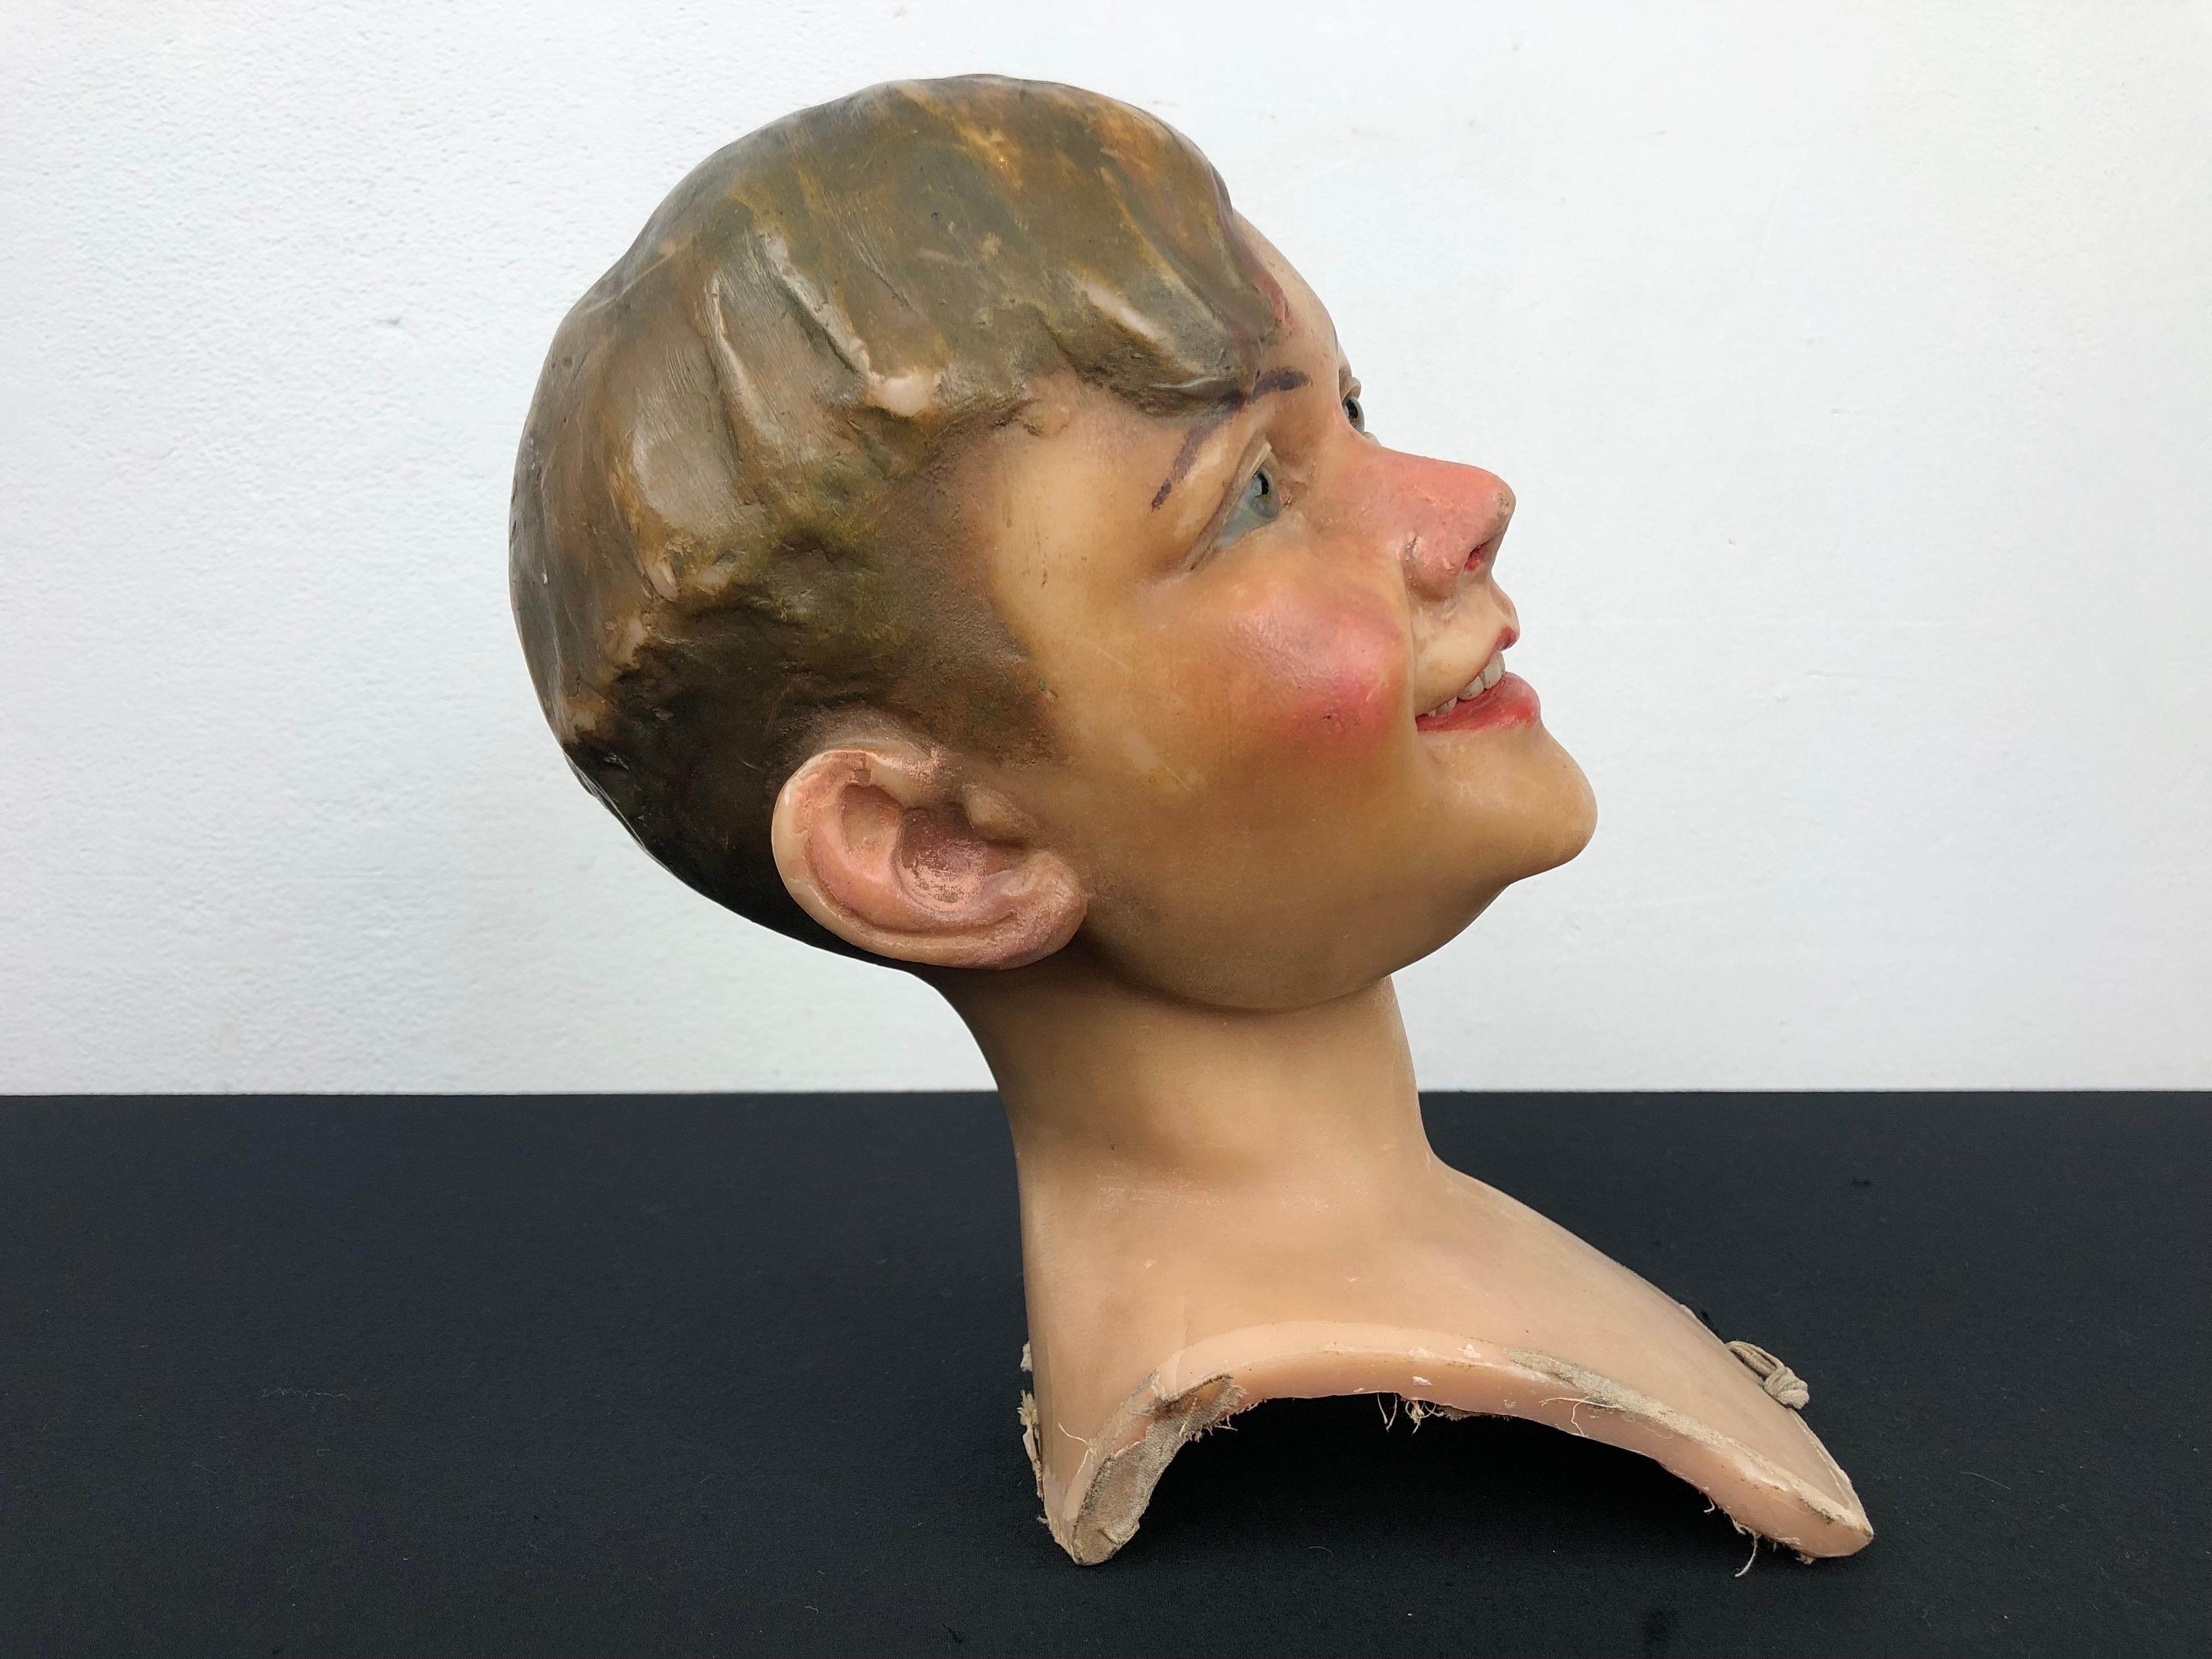 mannequin head with hair boy